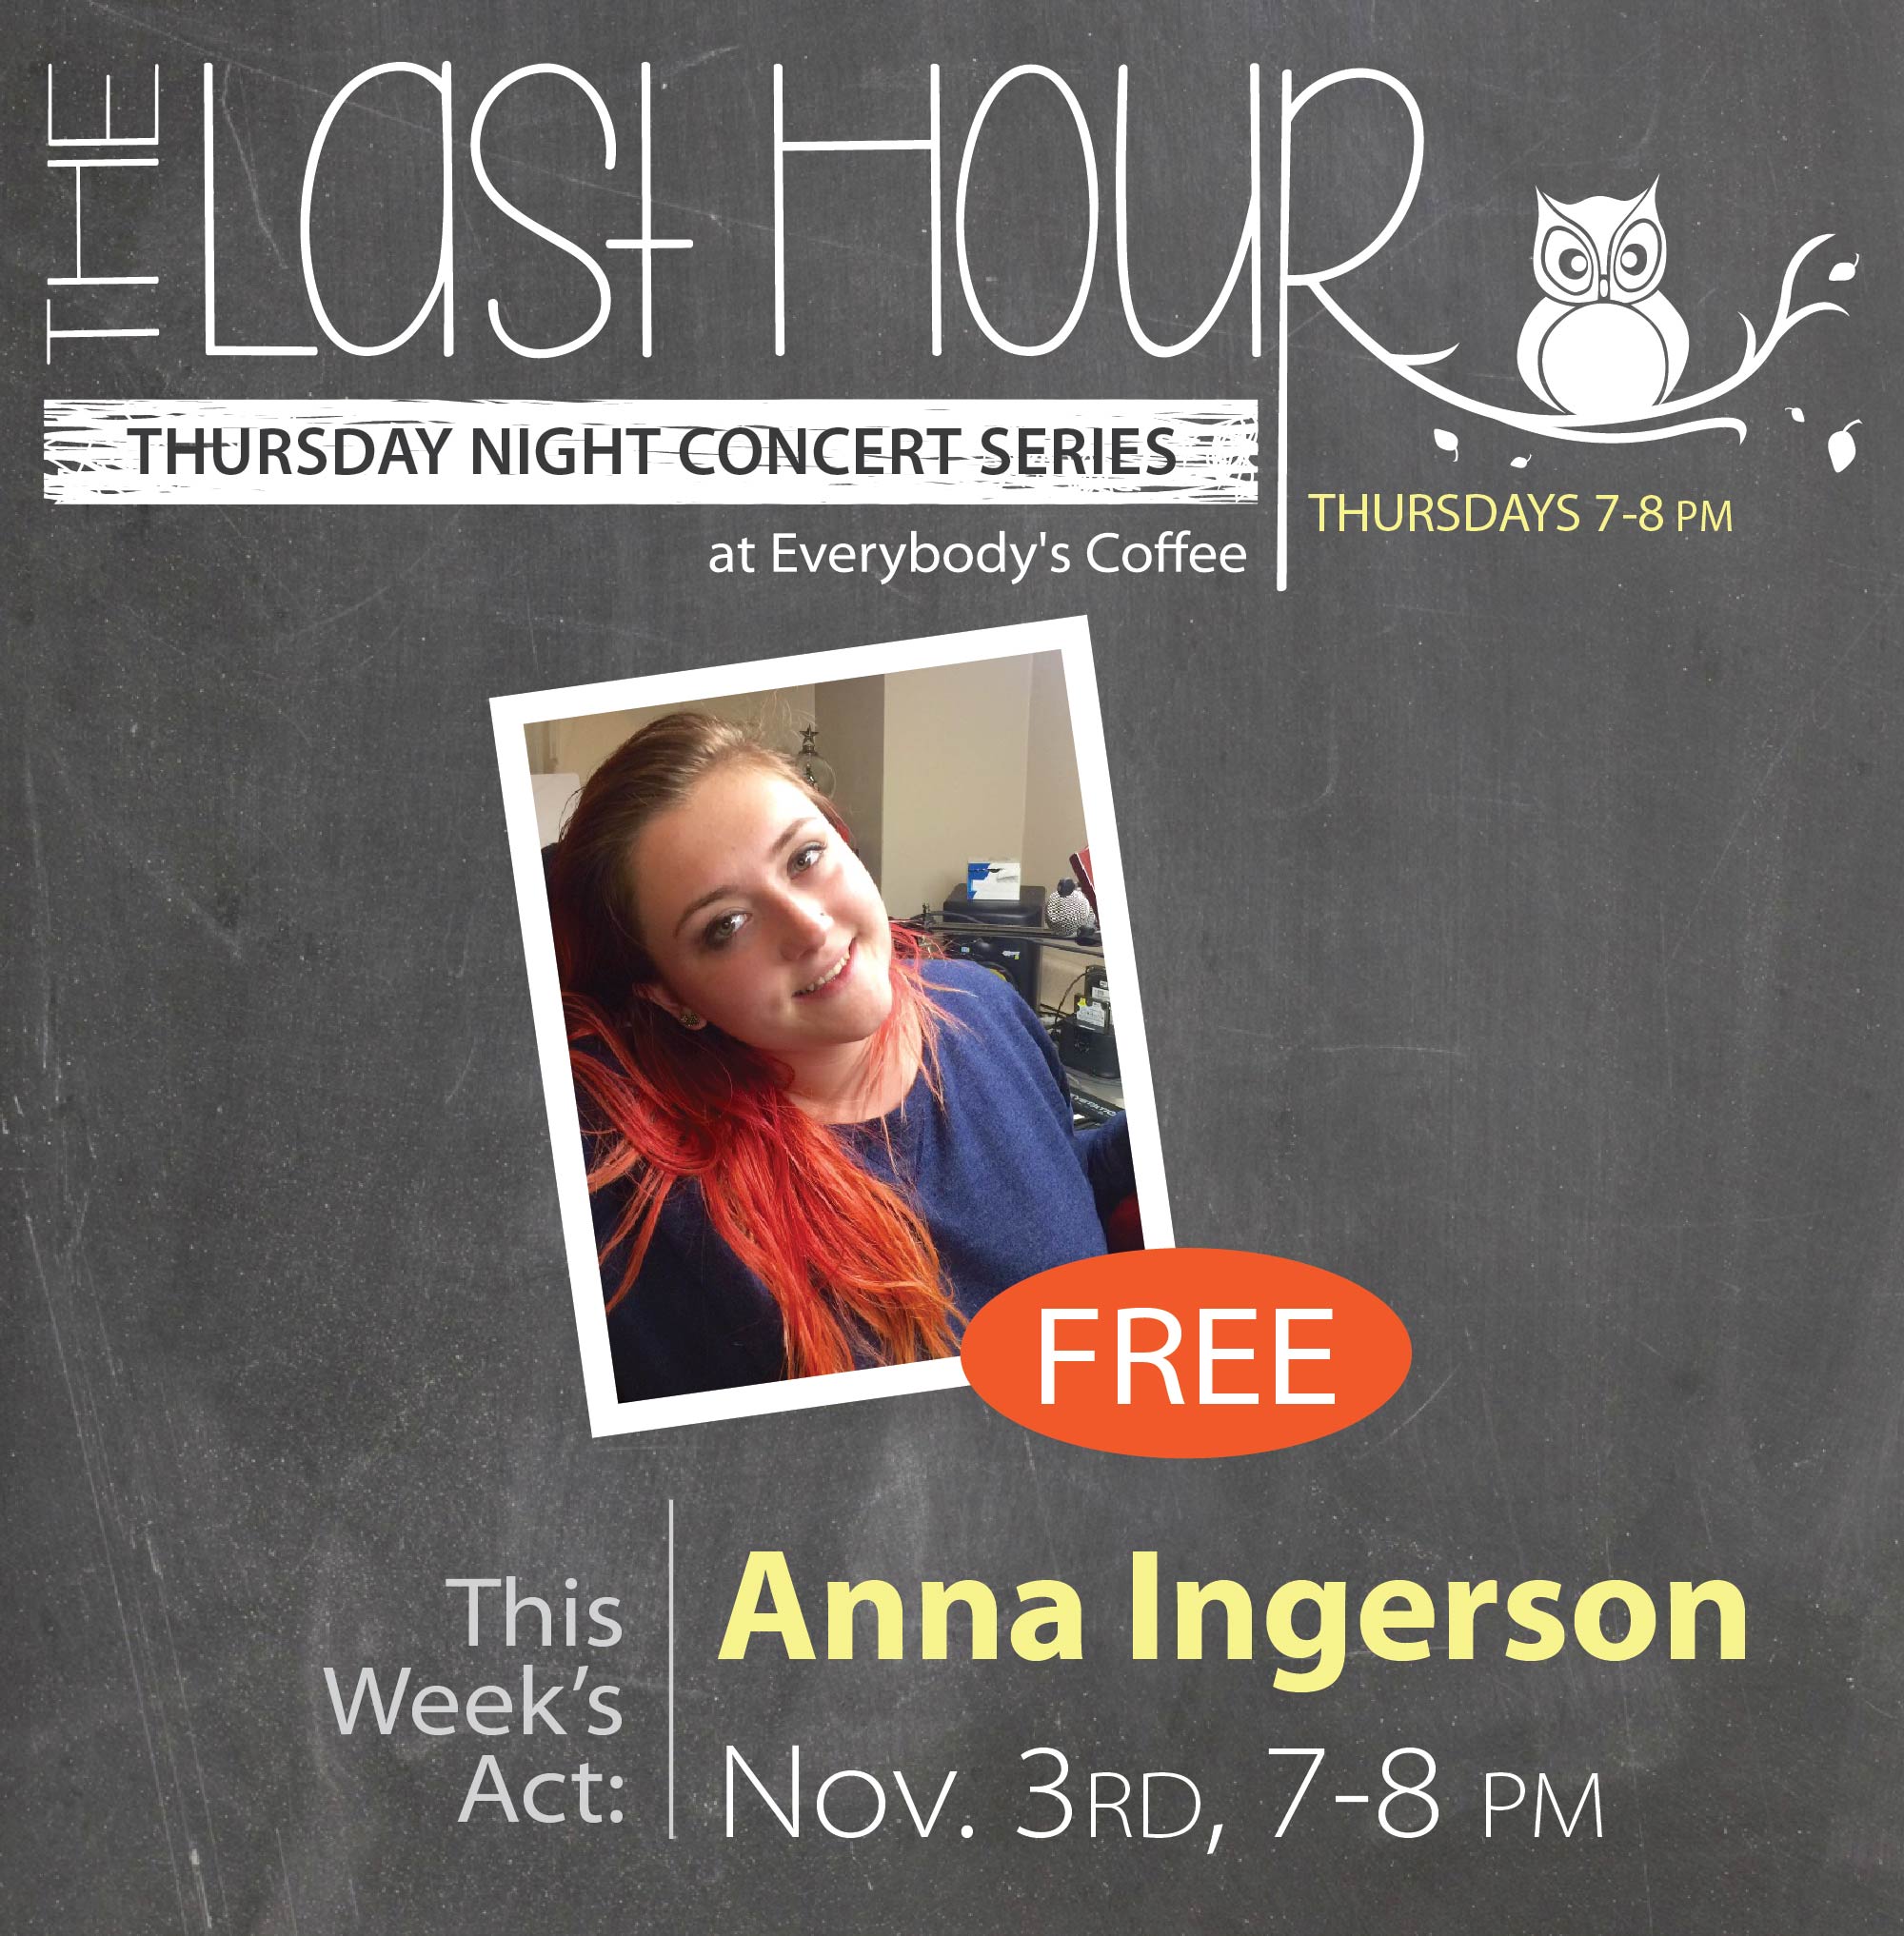 Last Hour Concert Series: Anna Ingerson